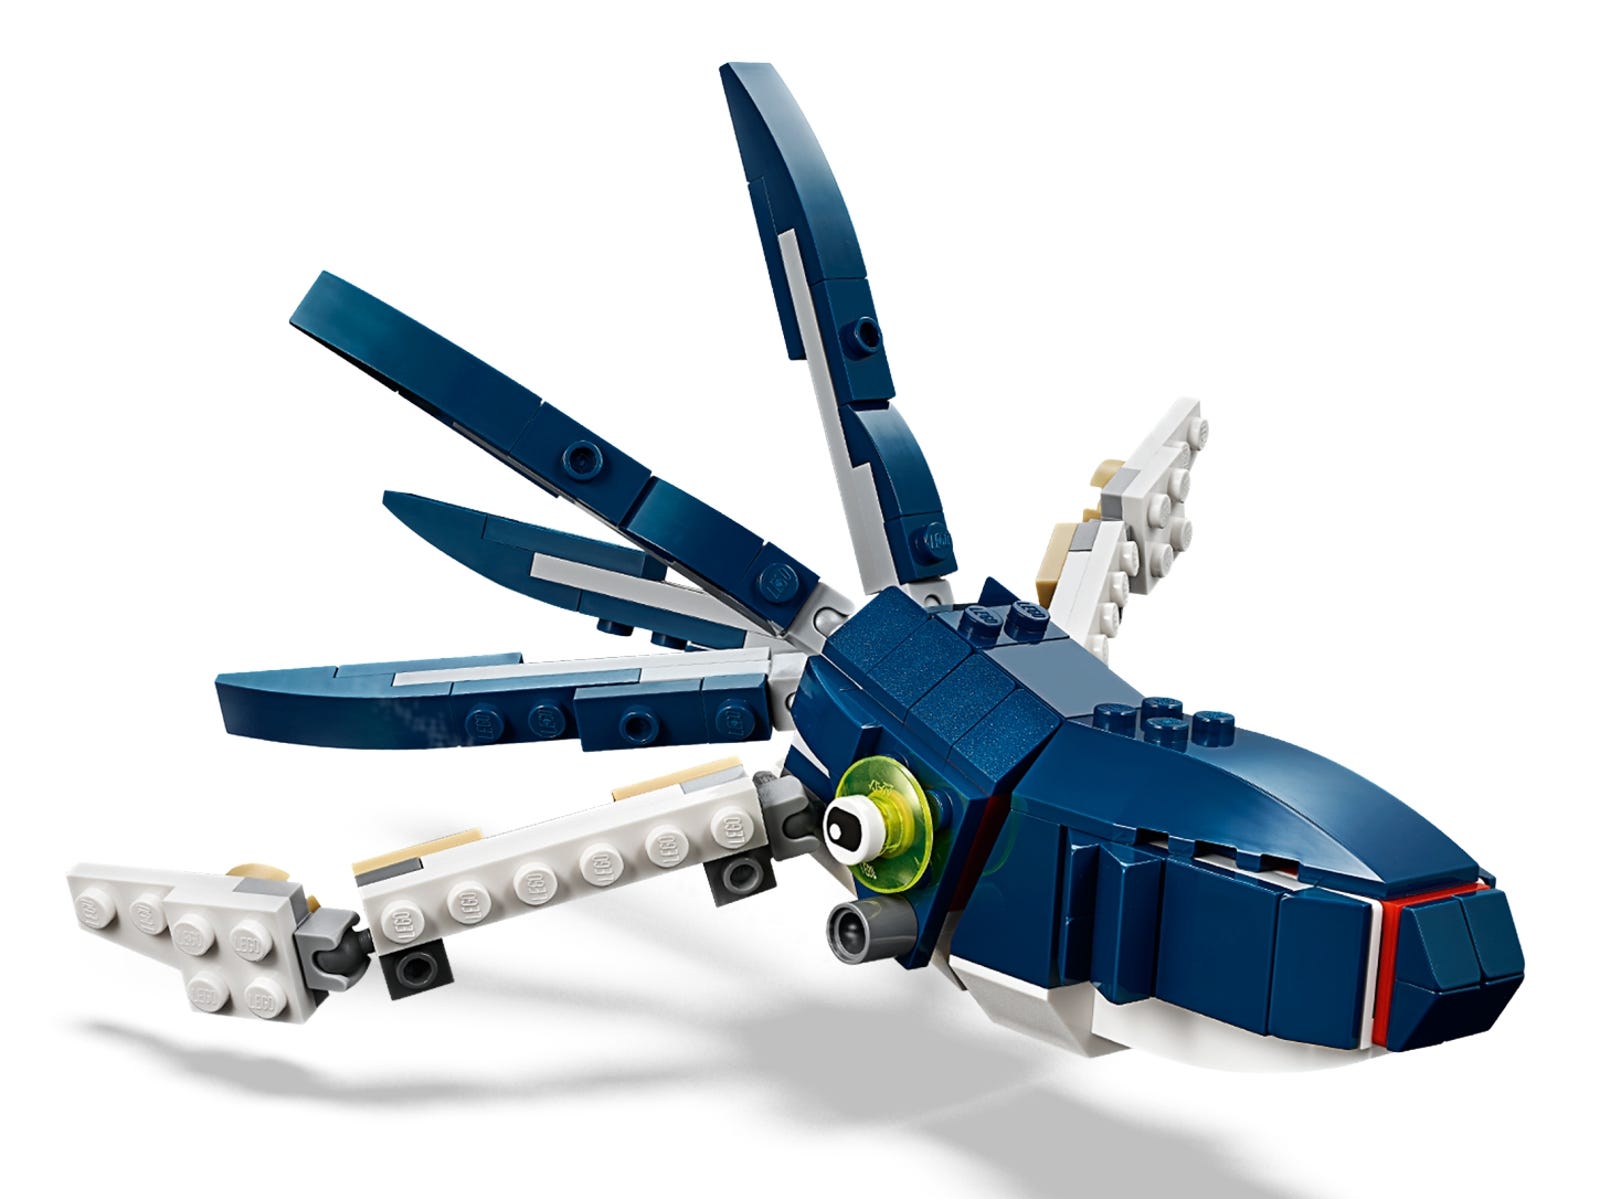 Lego Creator Deep Sea Creatures 31088